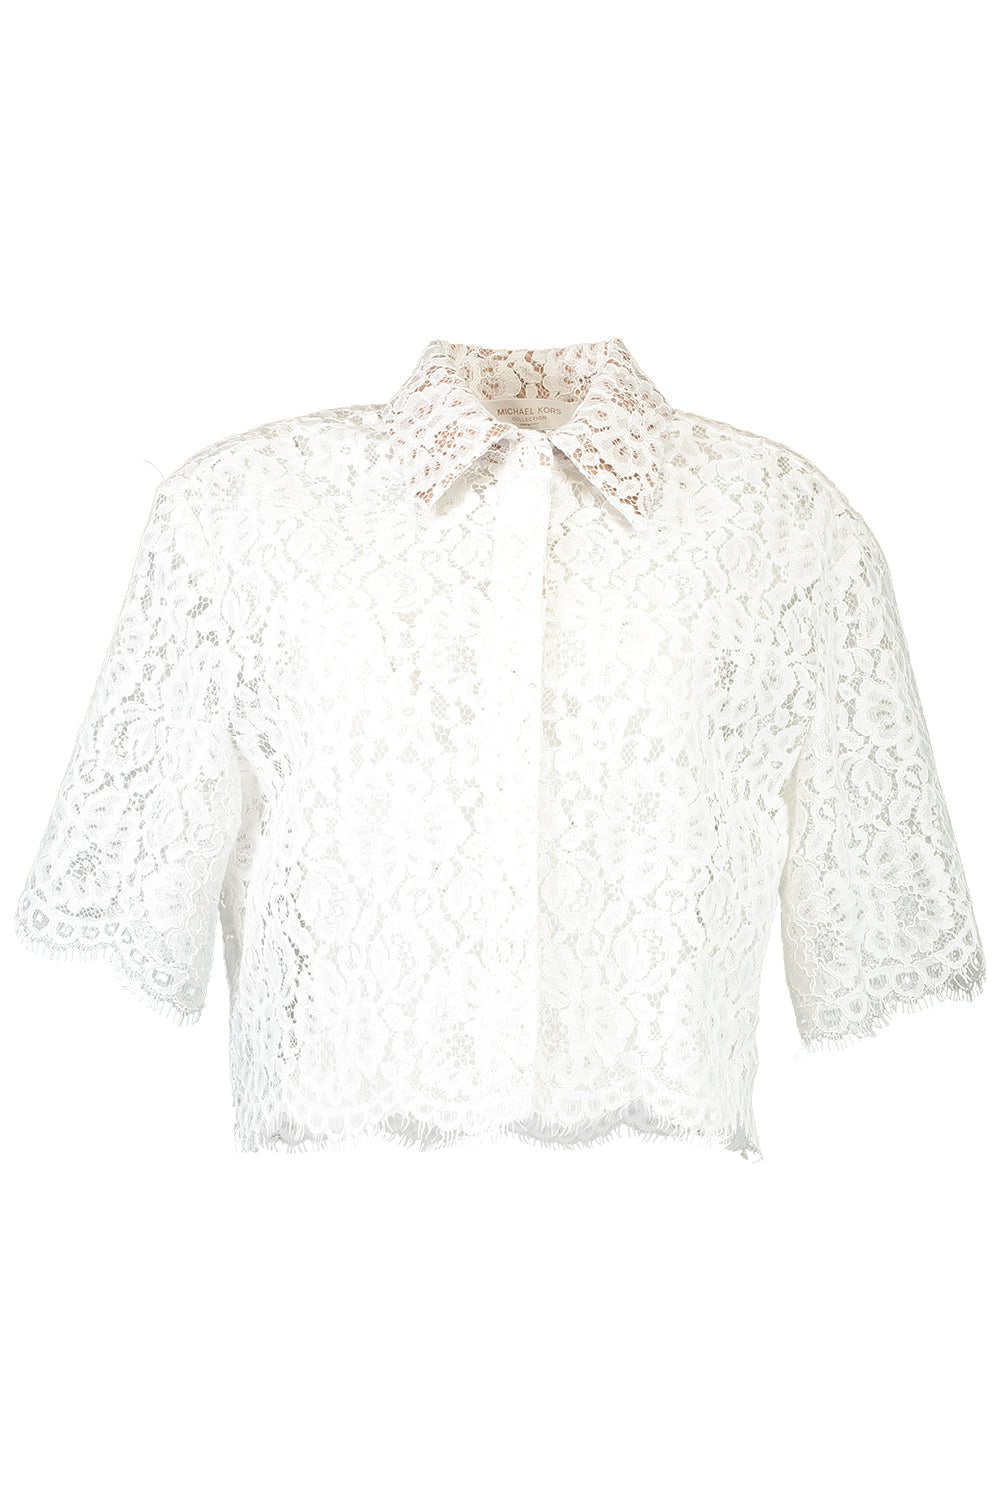 MICHAEL KORS-Floral Cropped Shirt-